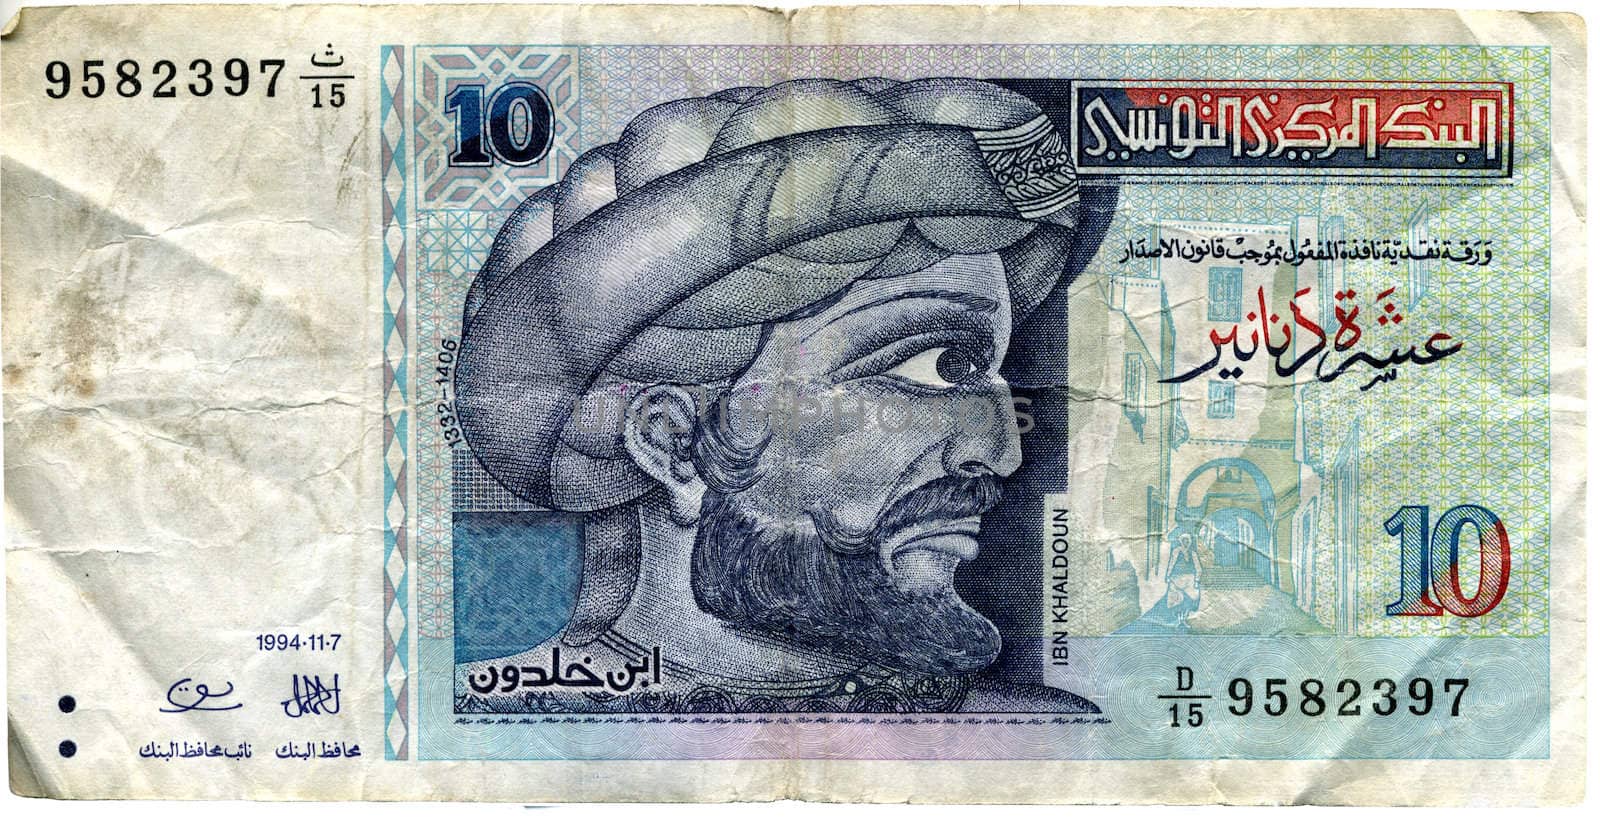 Ten tunisian dinars macro shot